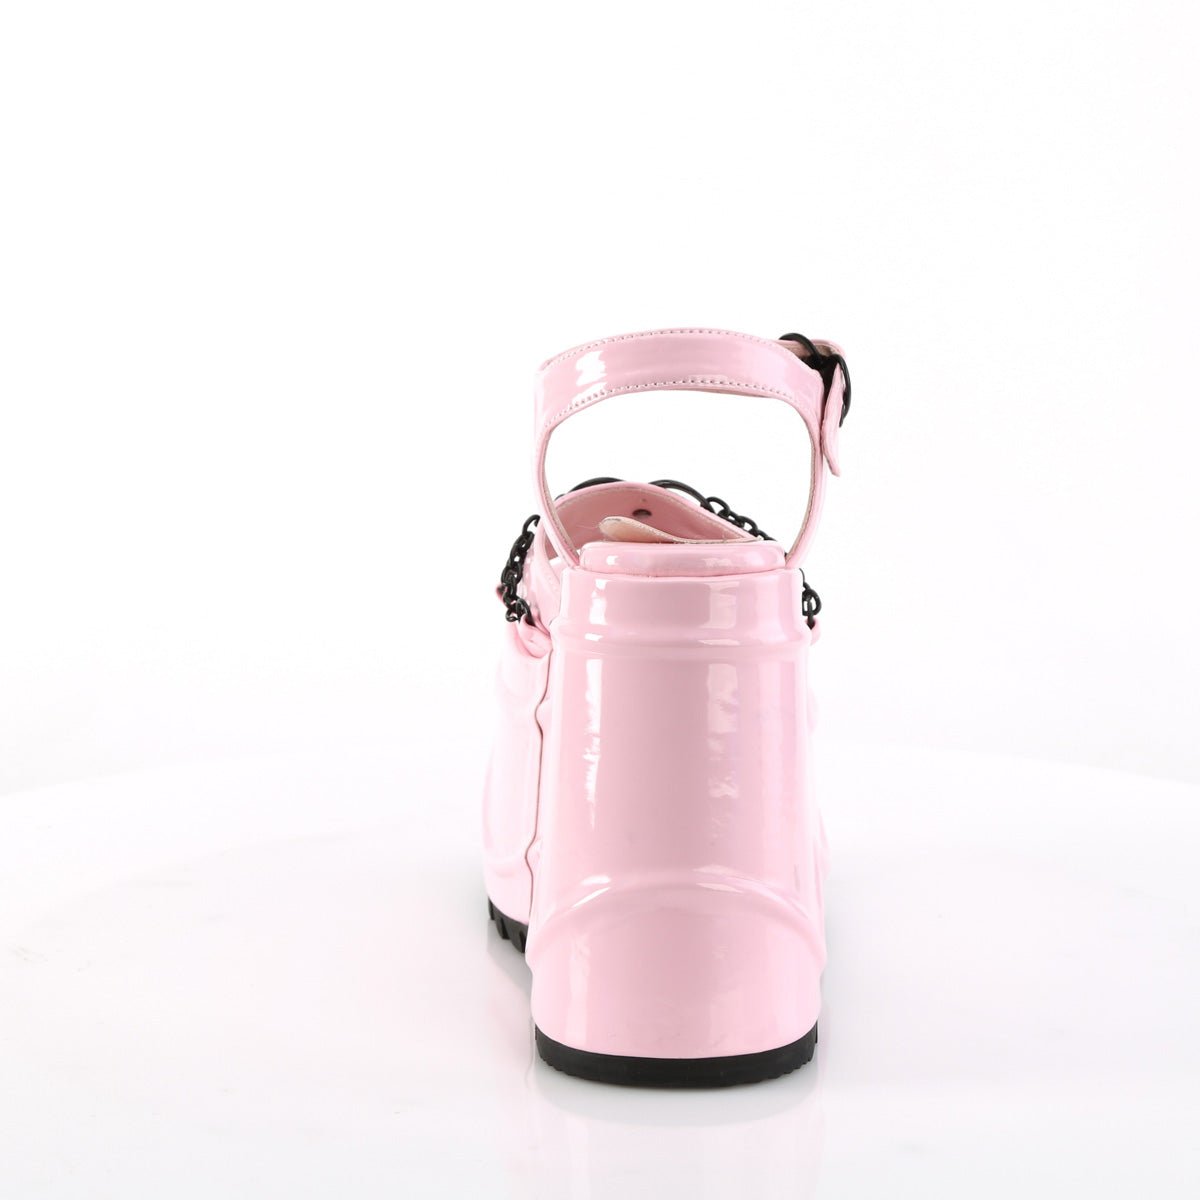 Too Fast | Demonia Wave 09 | Baby Pink Hologram Women's Sandals